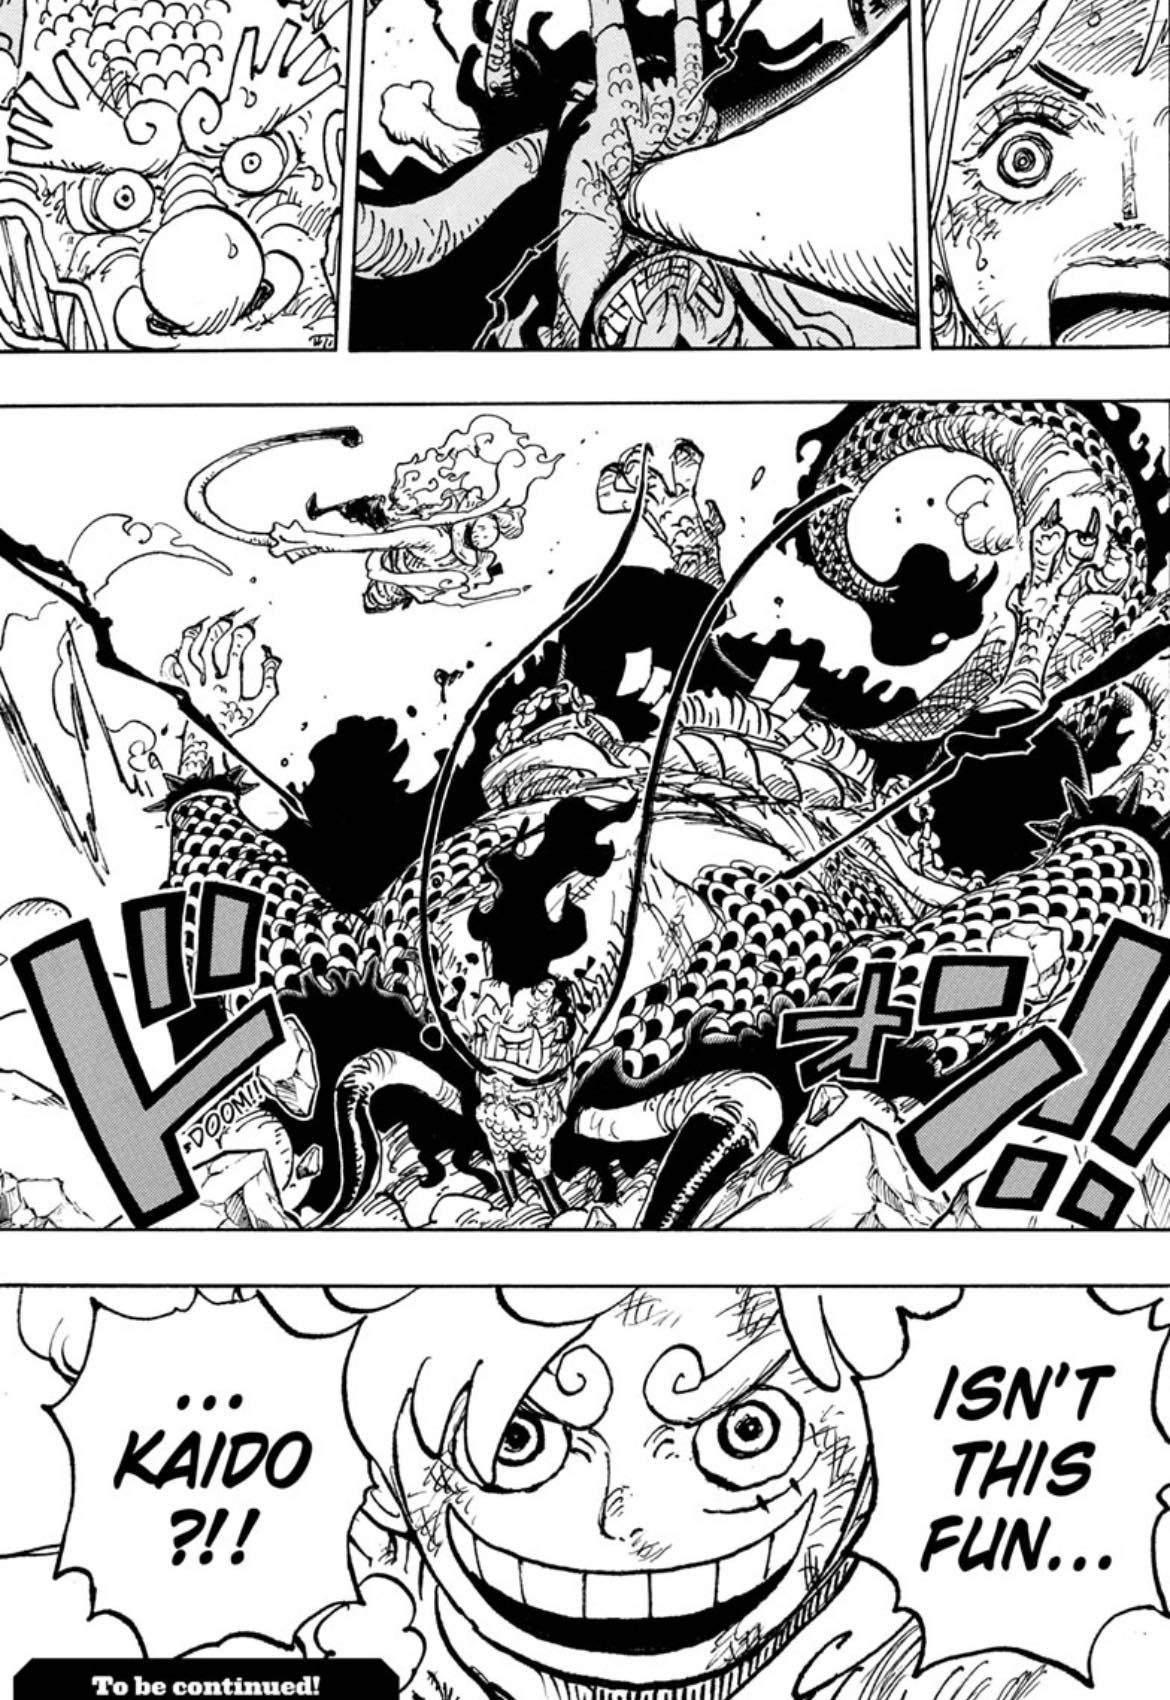 One Piece manga chapter 1045, part 3